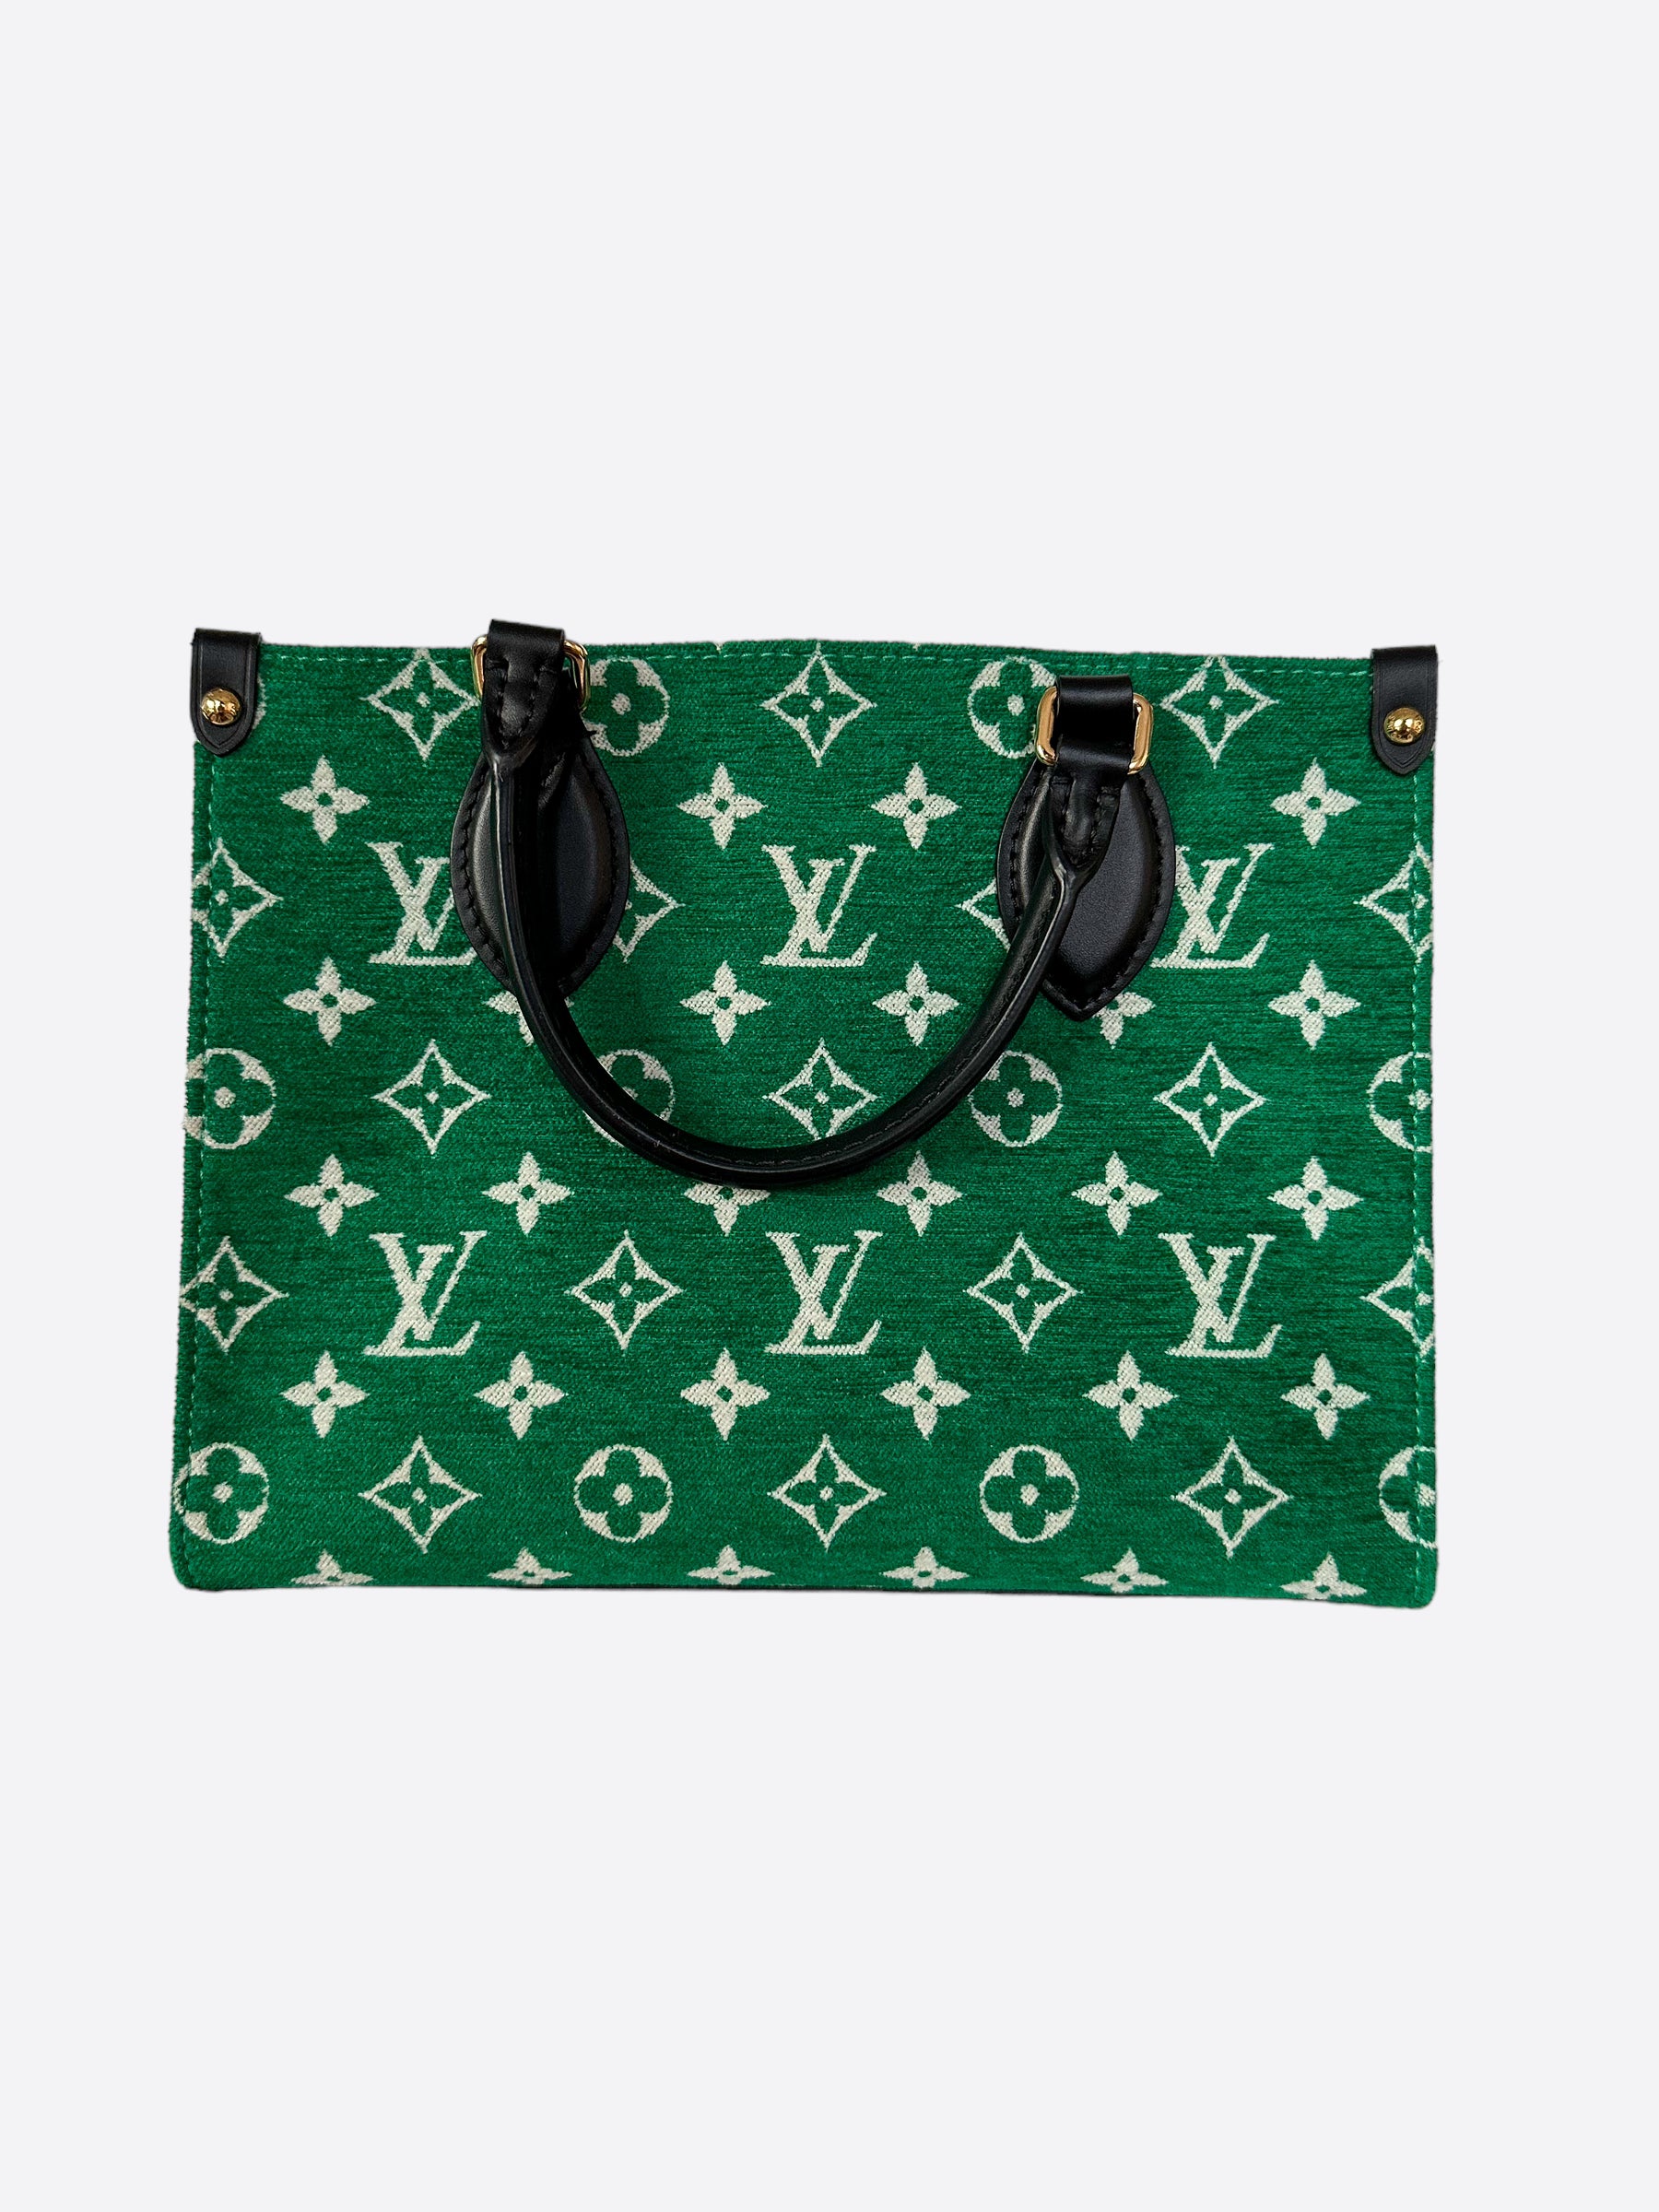 LOUIS VUITTON Onthego PM Monogram Velvet Tote Shoulder Bag Green